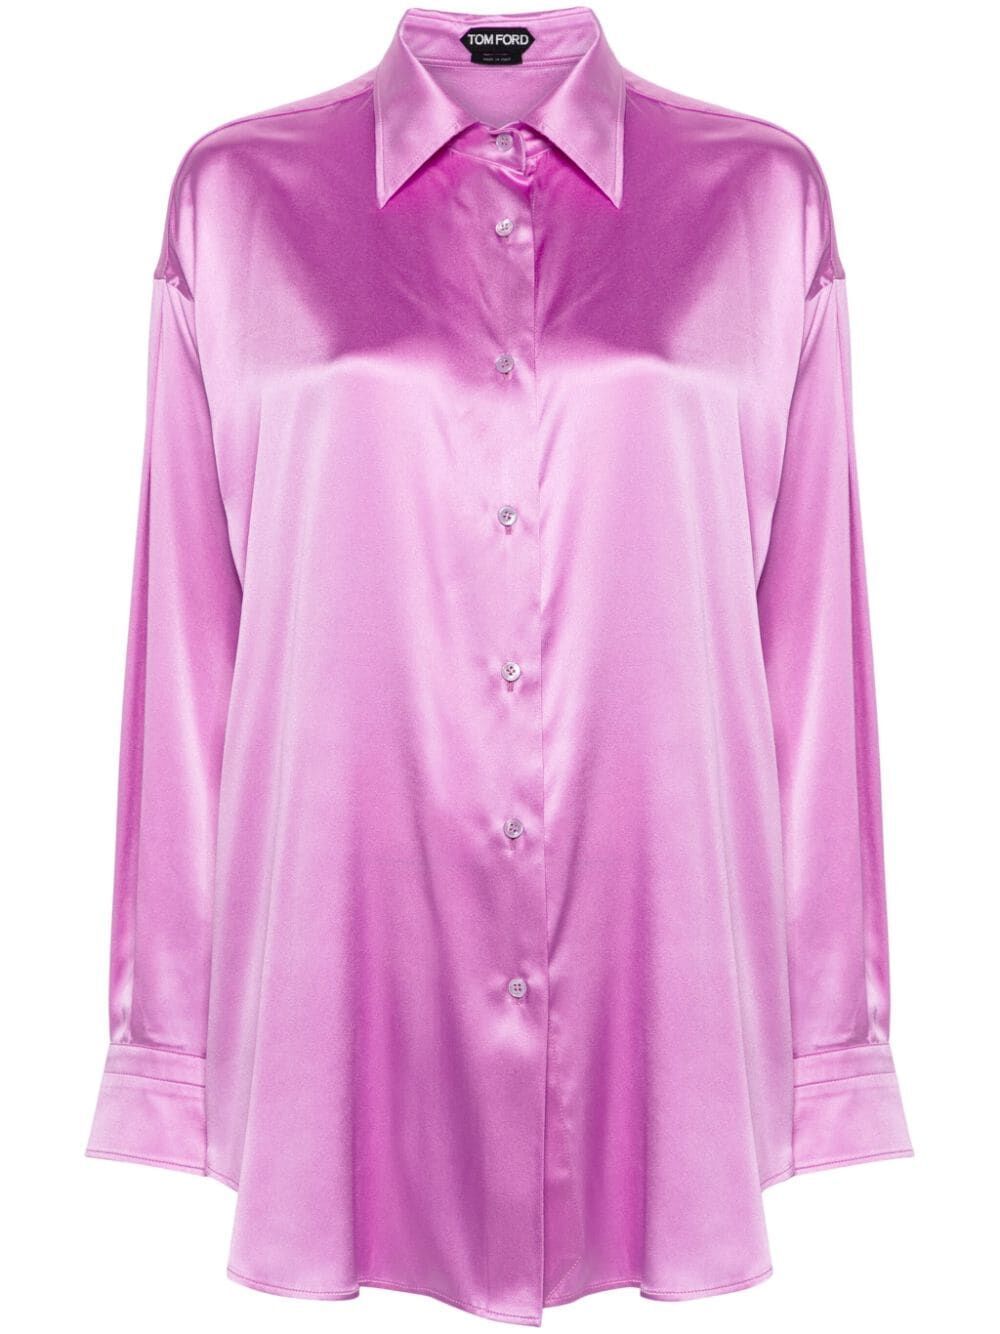 قميص حرير فاخر مع أزرار للنساء - وردي وأرجواني